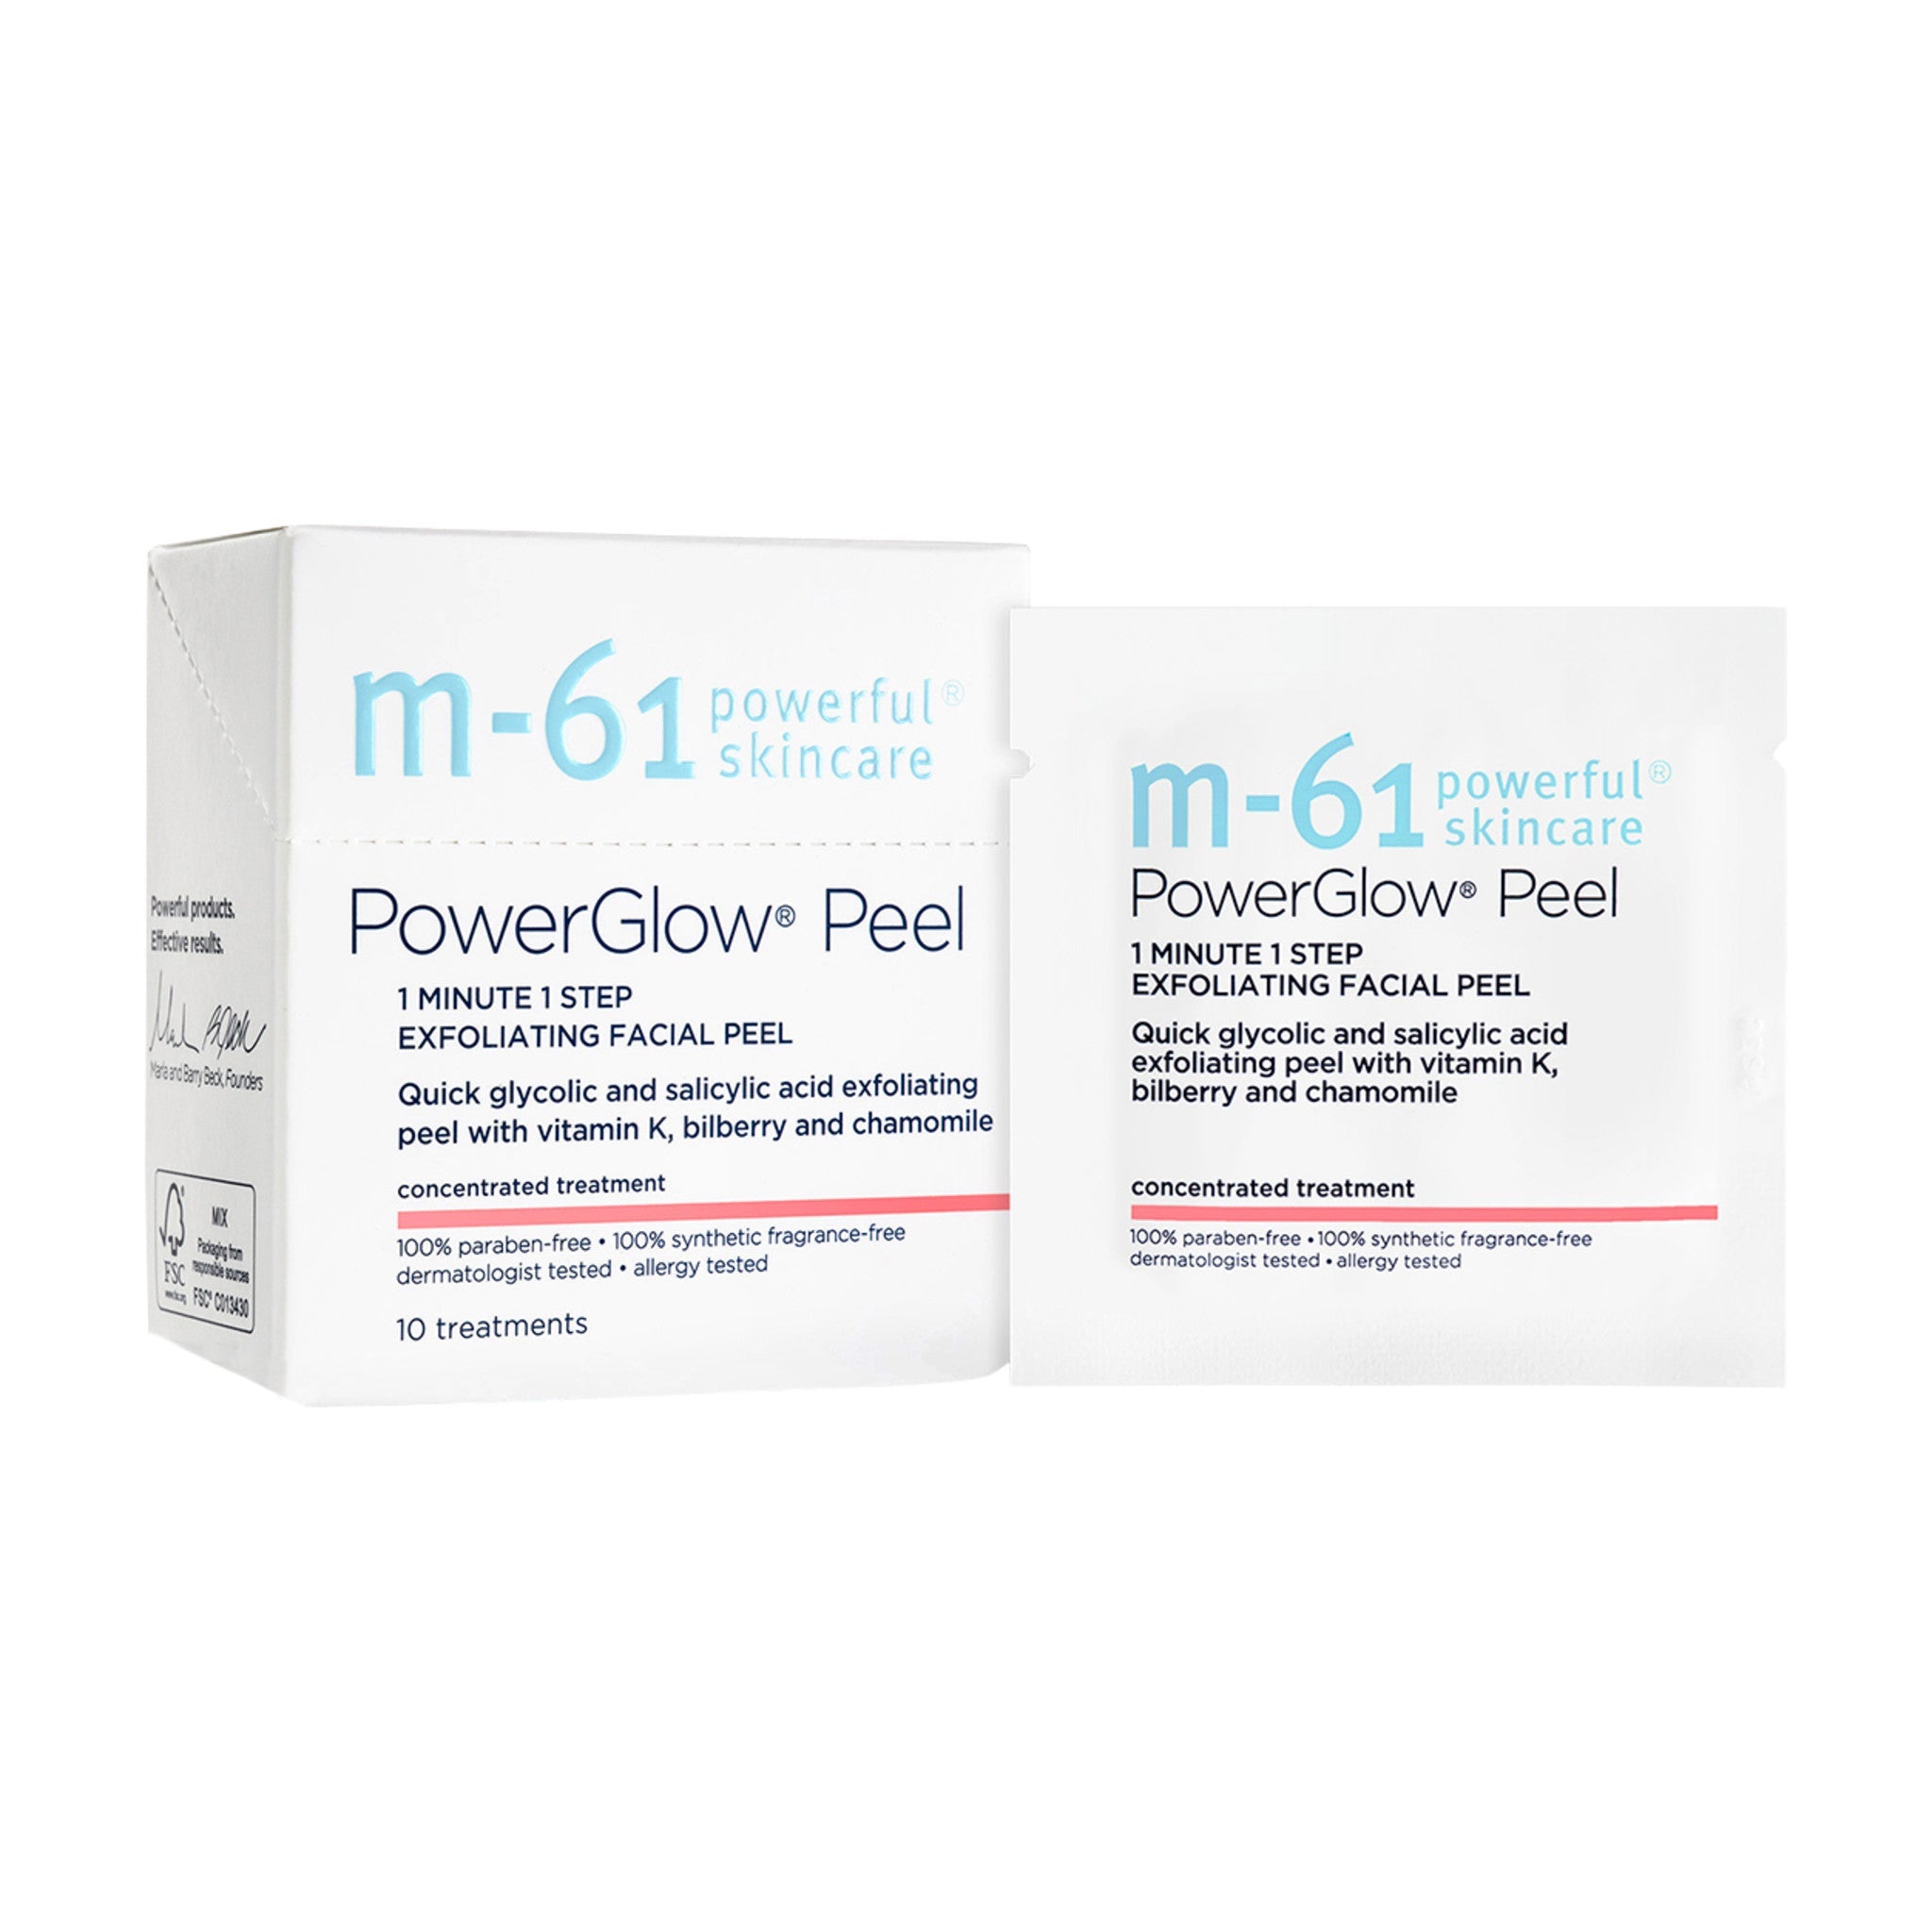 M-61 PowerGlow Peel Size variant: 10 treatments main image.